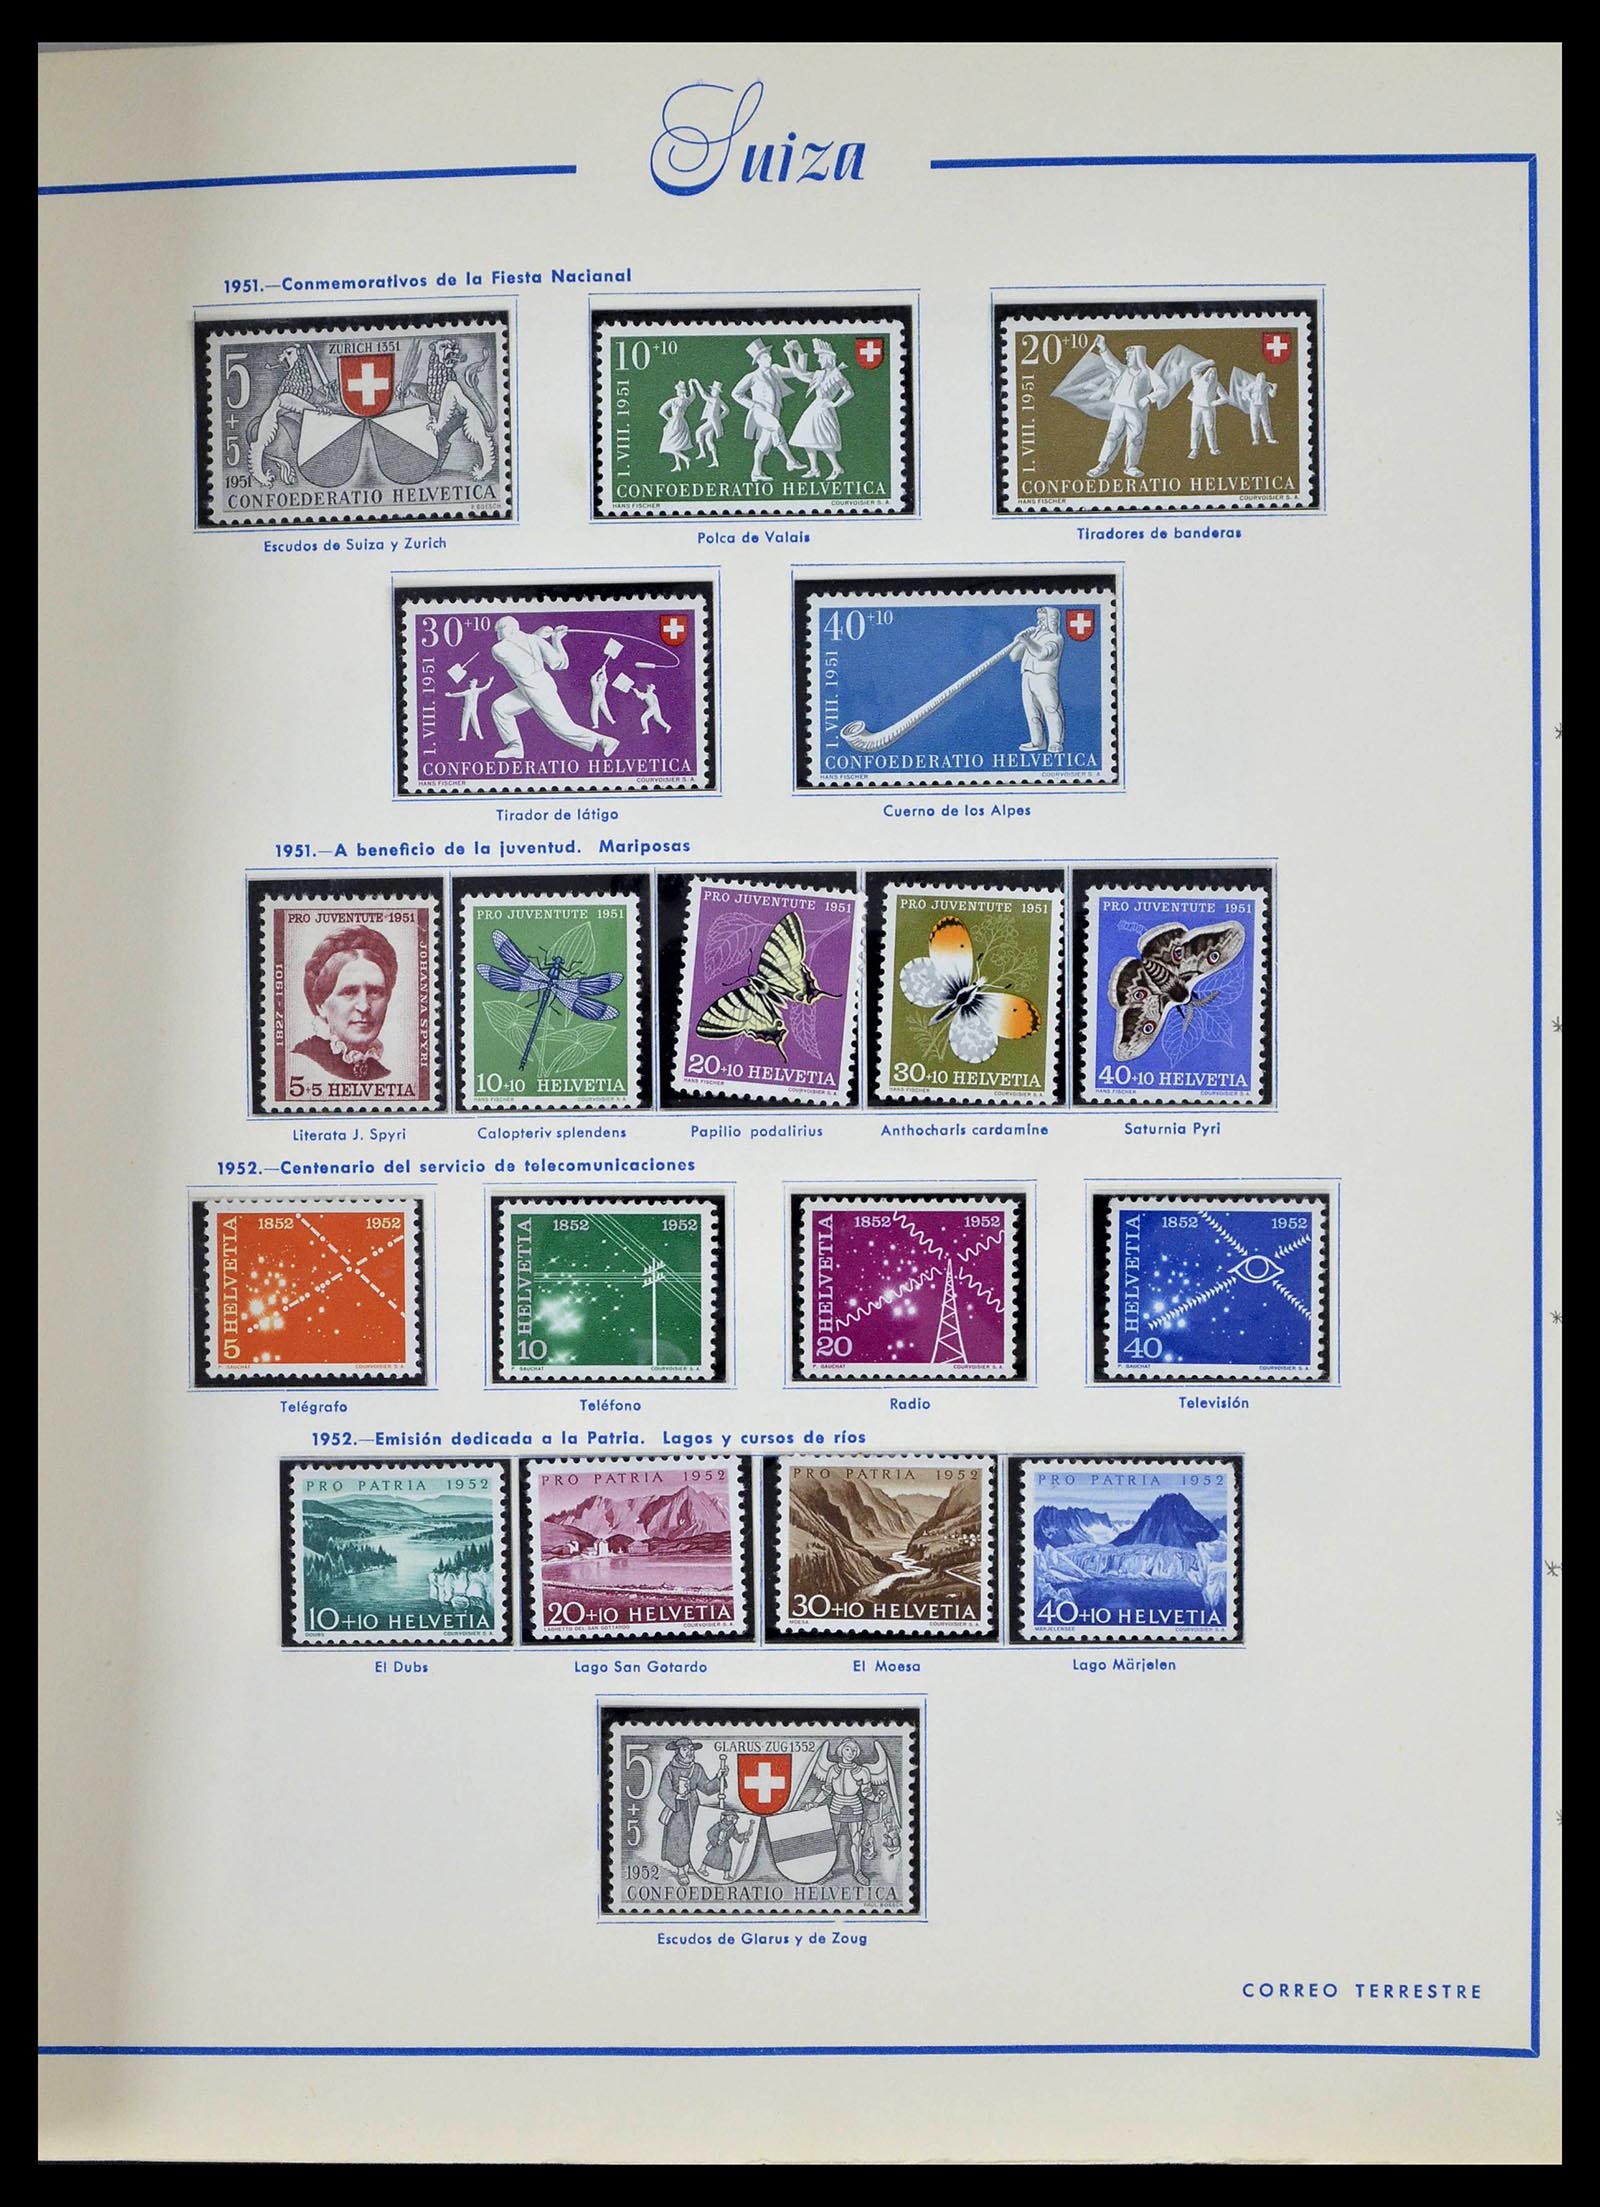 39217 0031 - Stamp collection 39217 Switzerland 1850-1986.